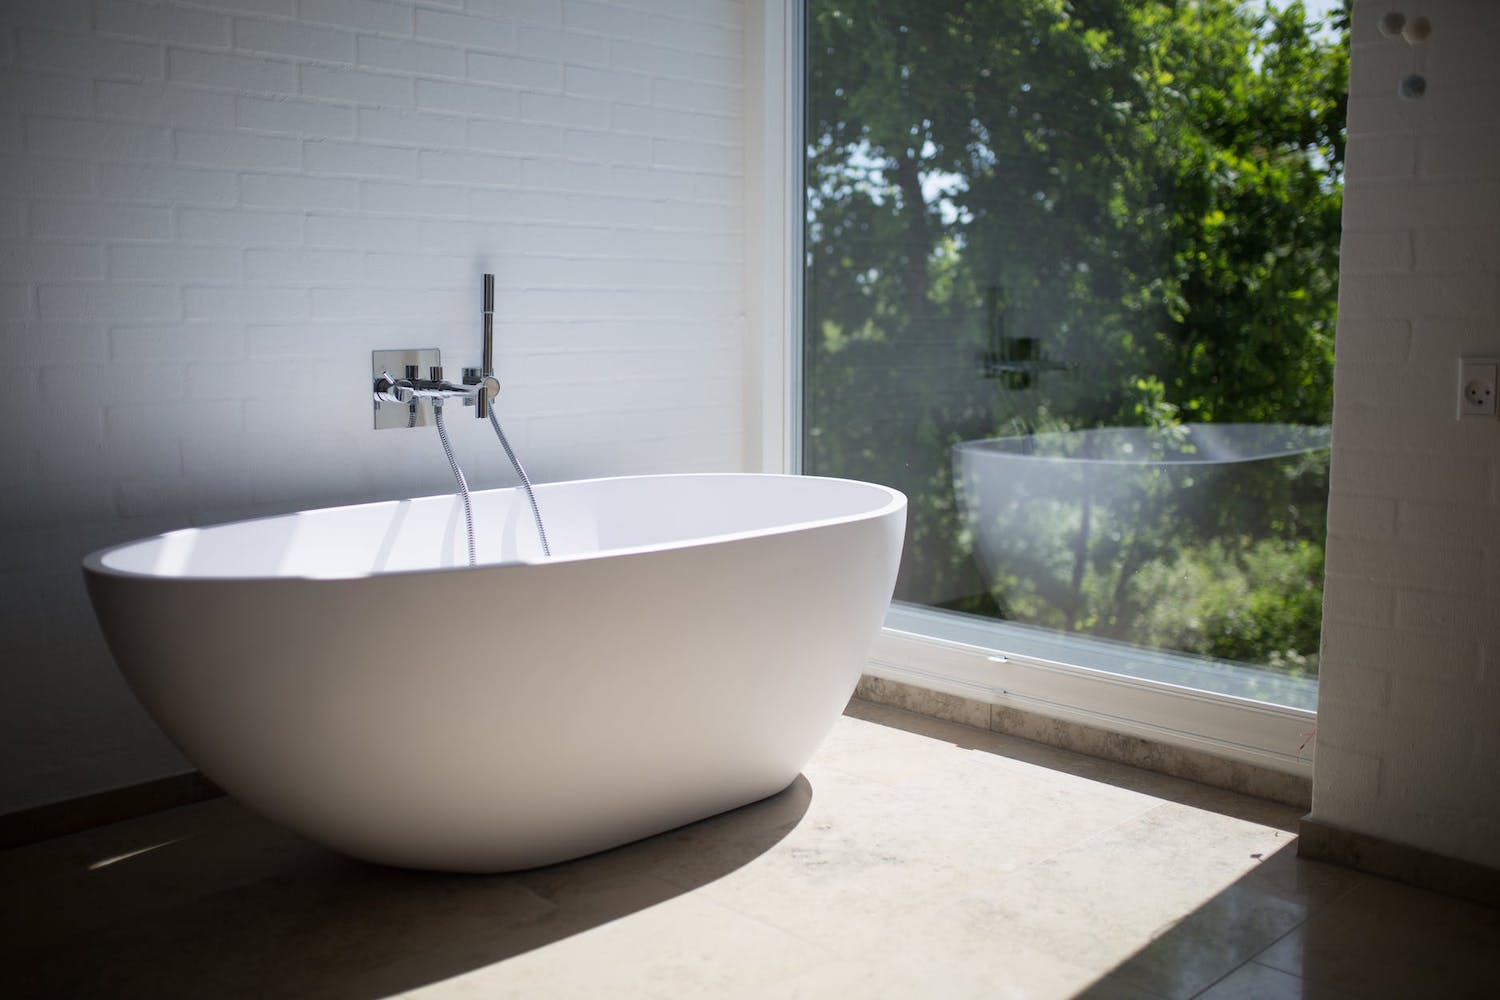 luxurious bath tub overlooking garden